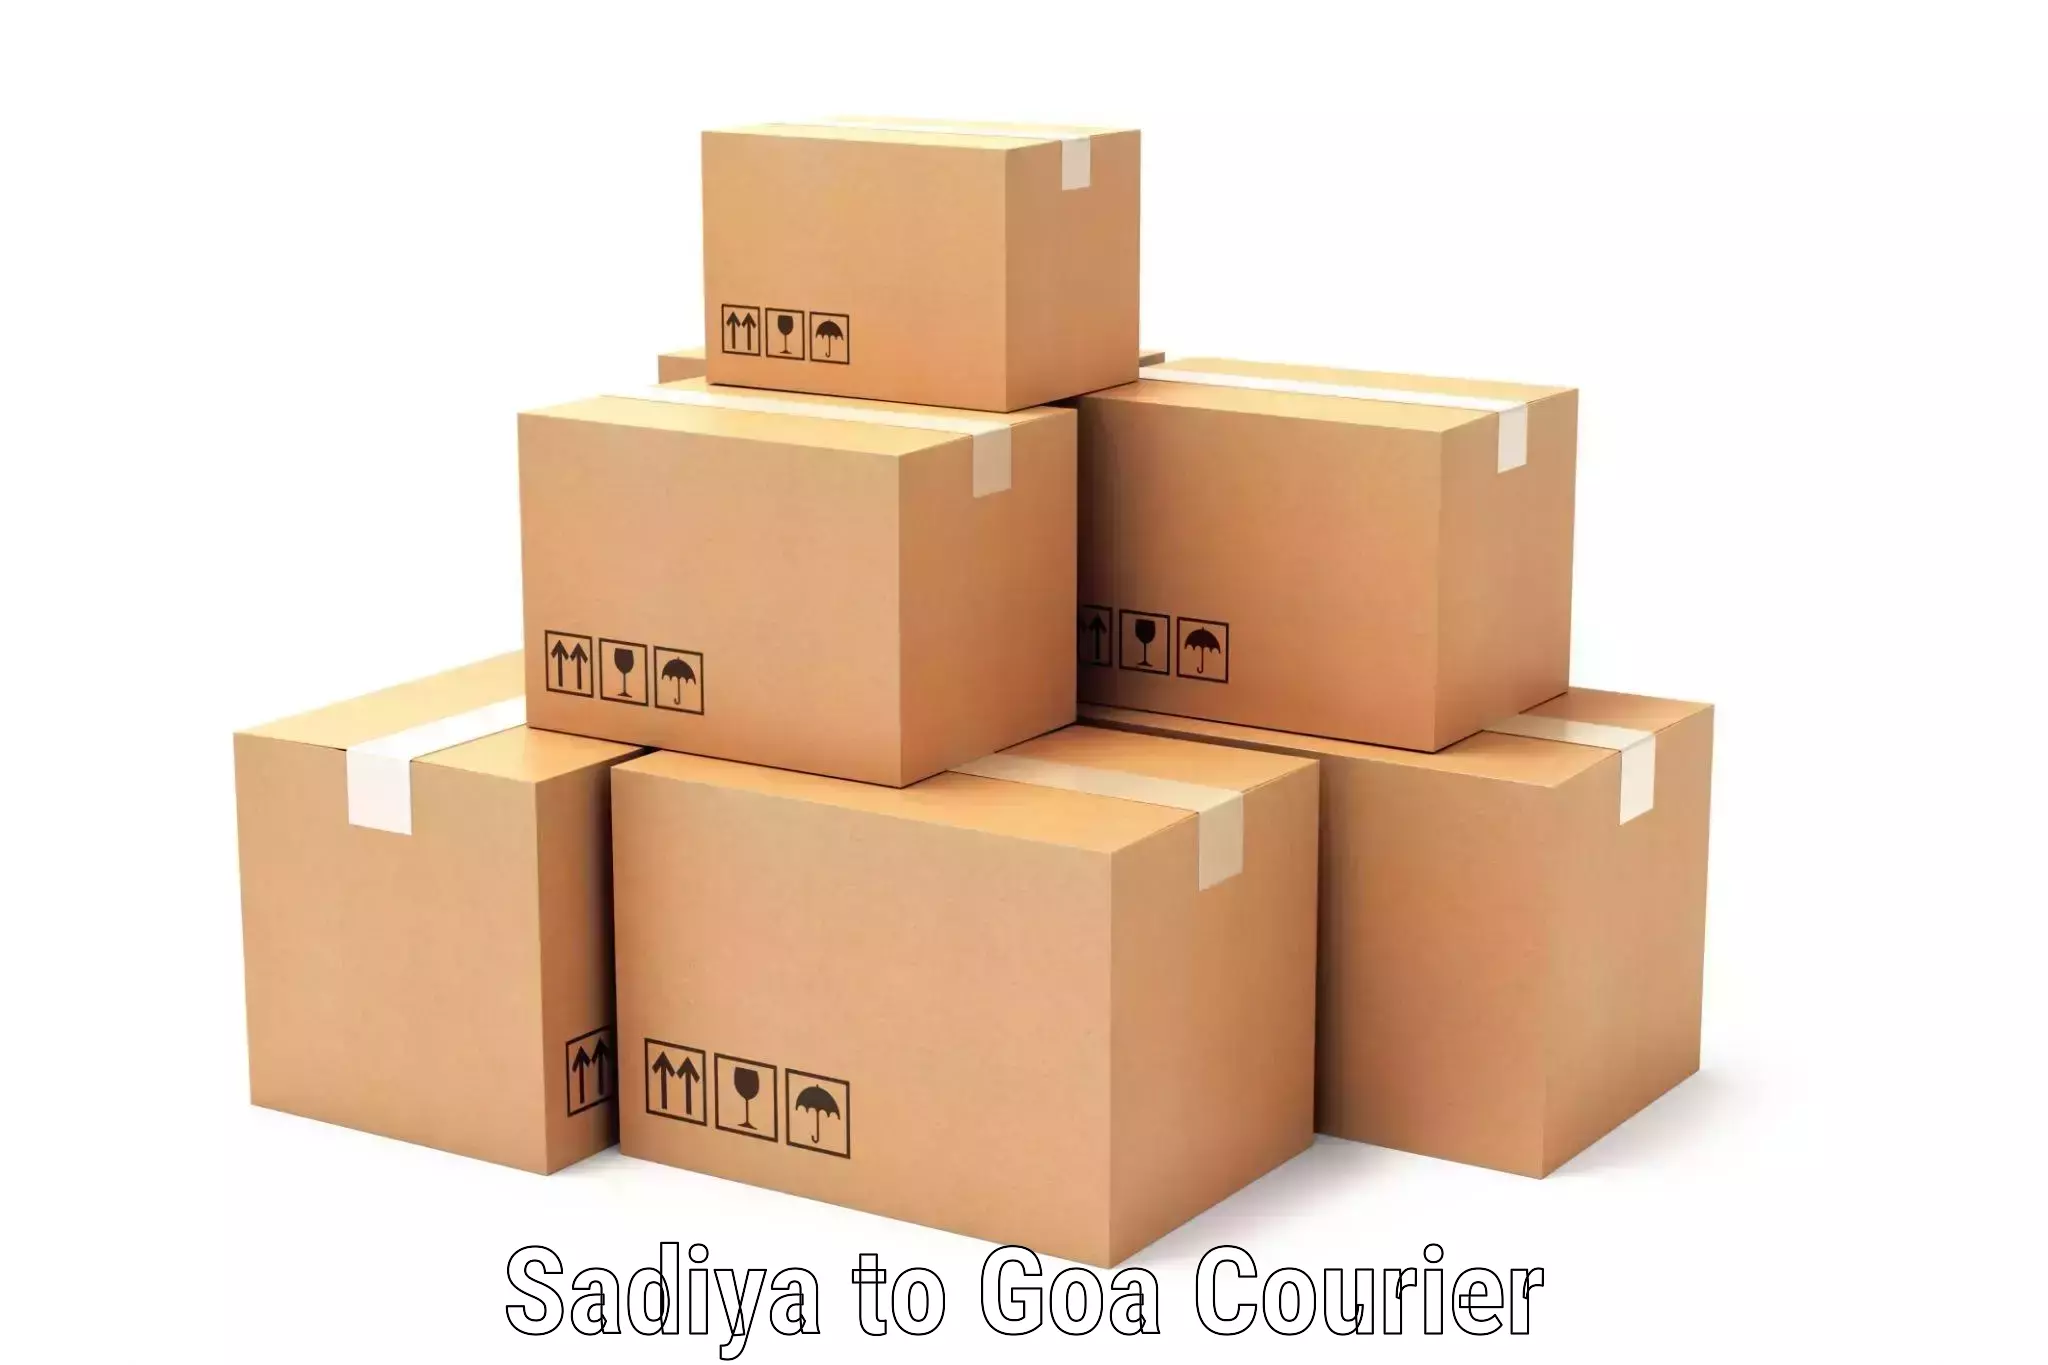 Local delivery service Sadiya to Goa